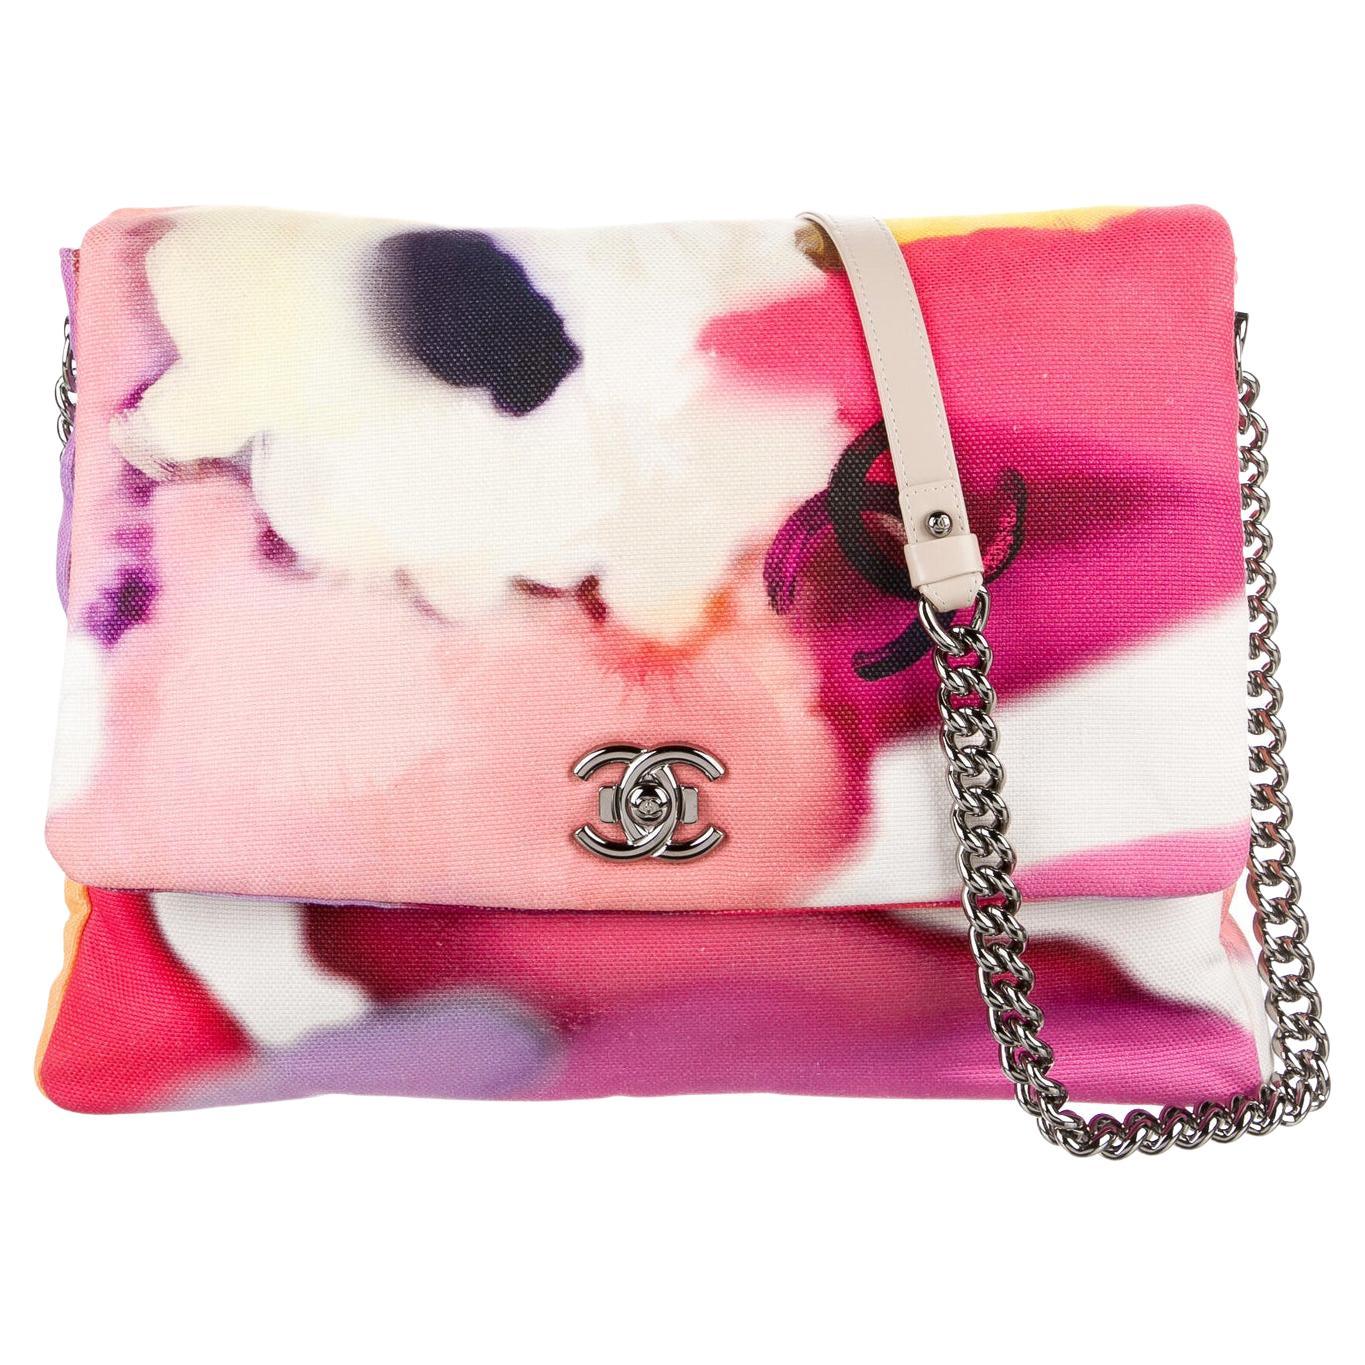 Chanel Rare Pink Tie Dye Graffiti Flower Paintbrush Large Maxi Shoulder Bag For Sale